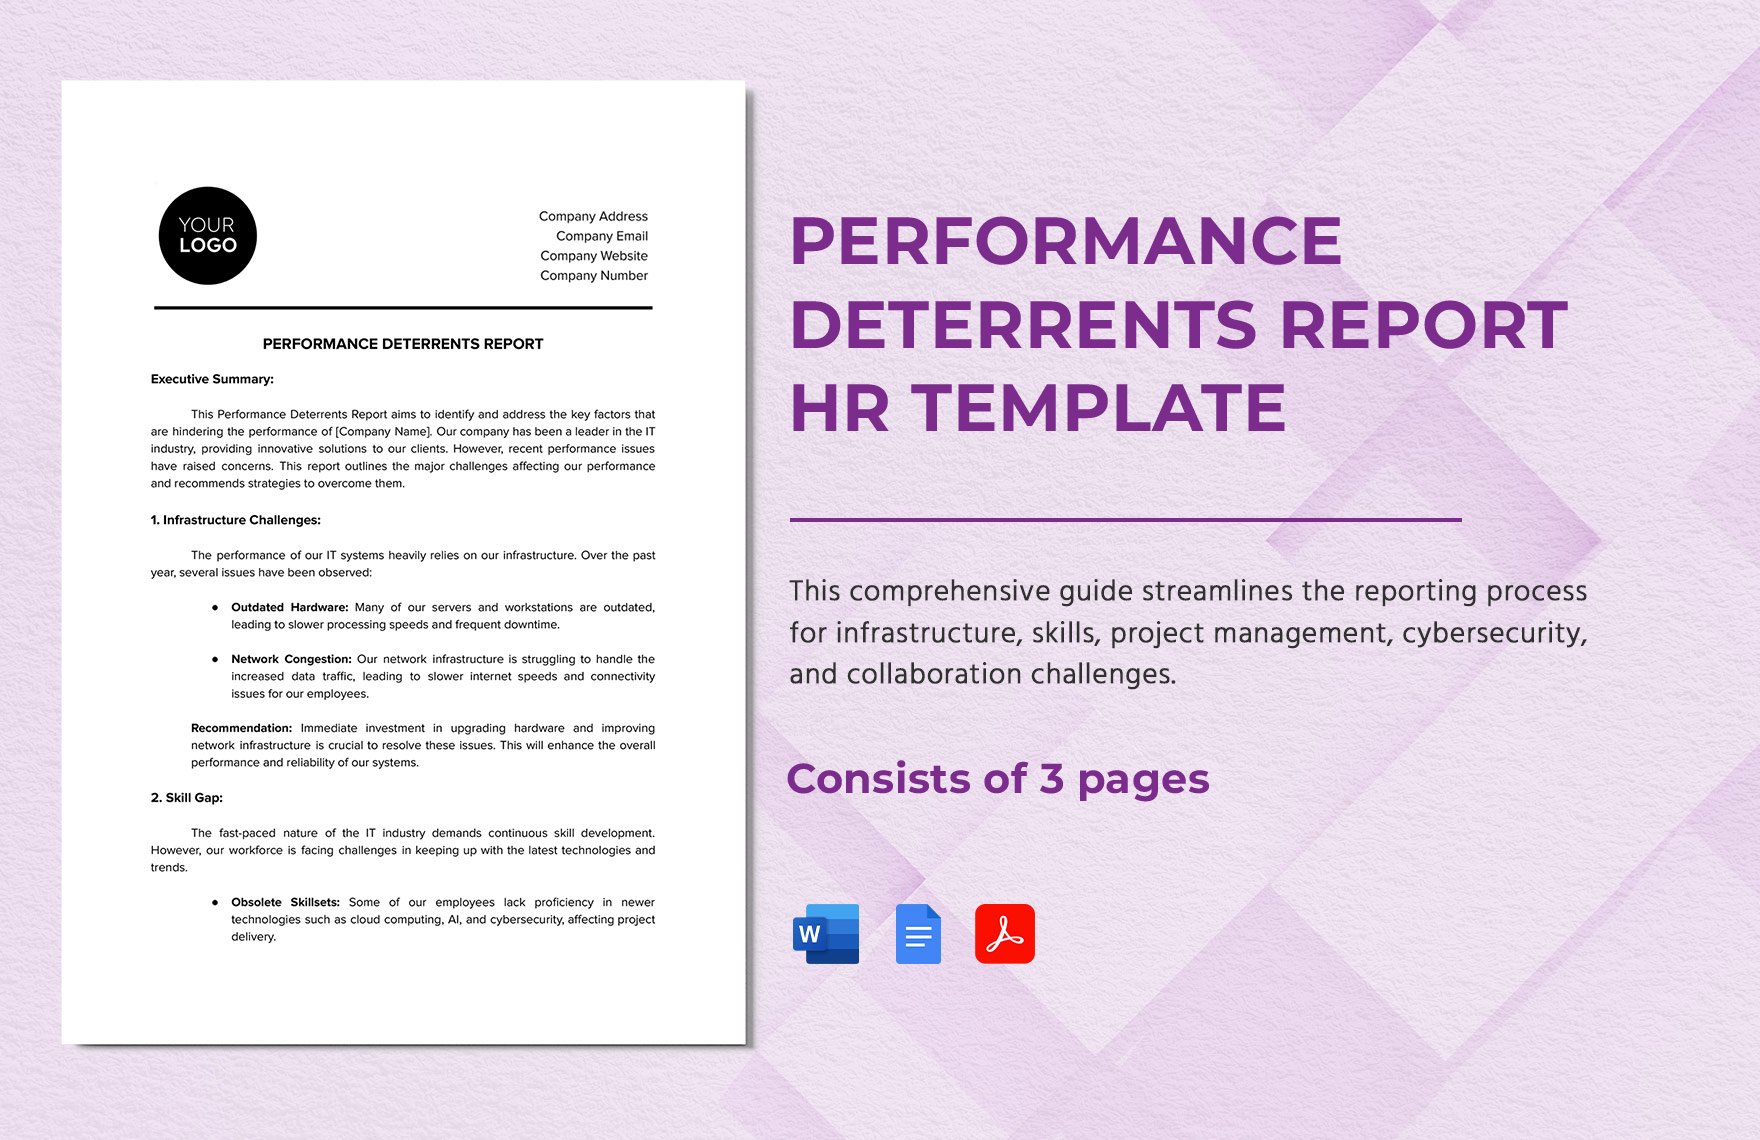 Performance Deterrents Report HR Template